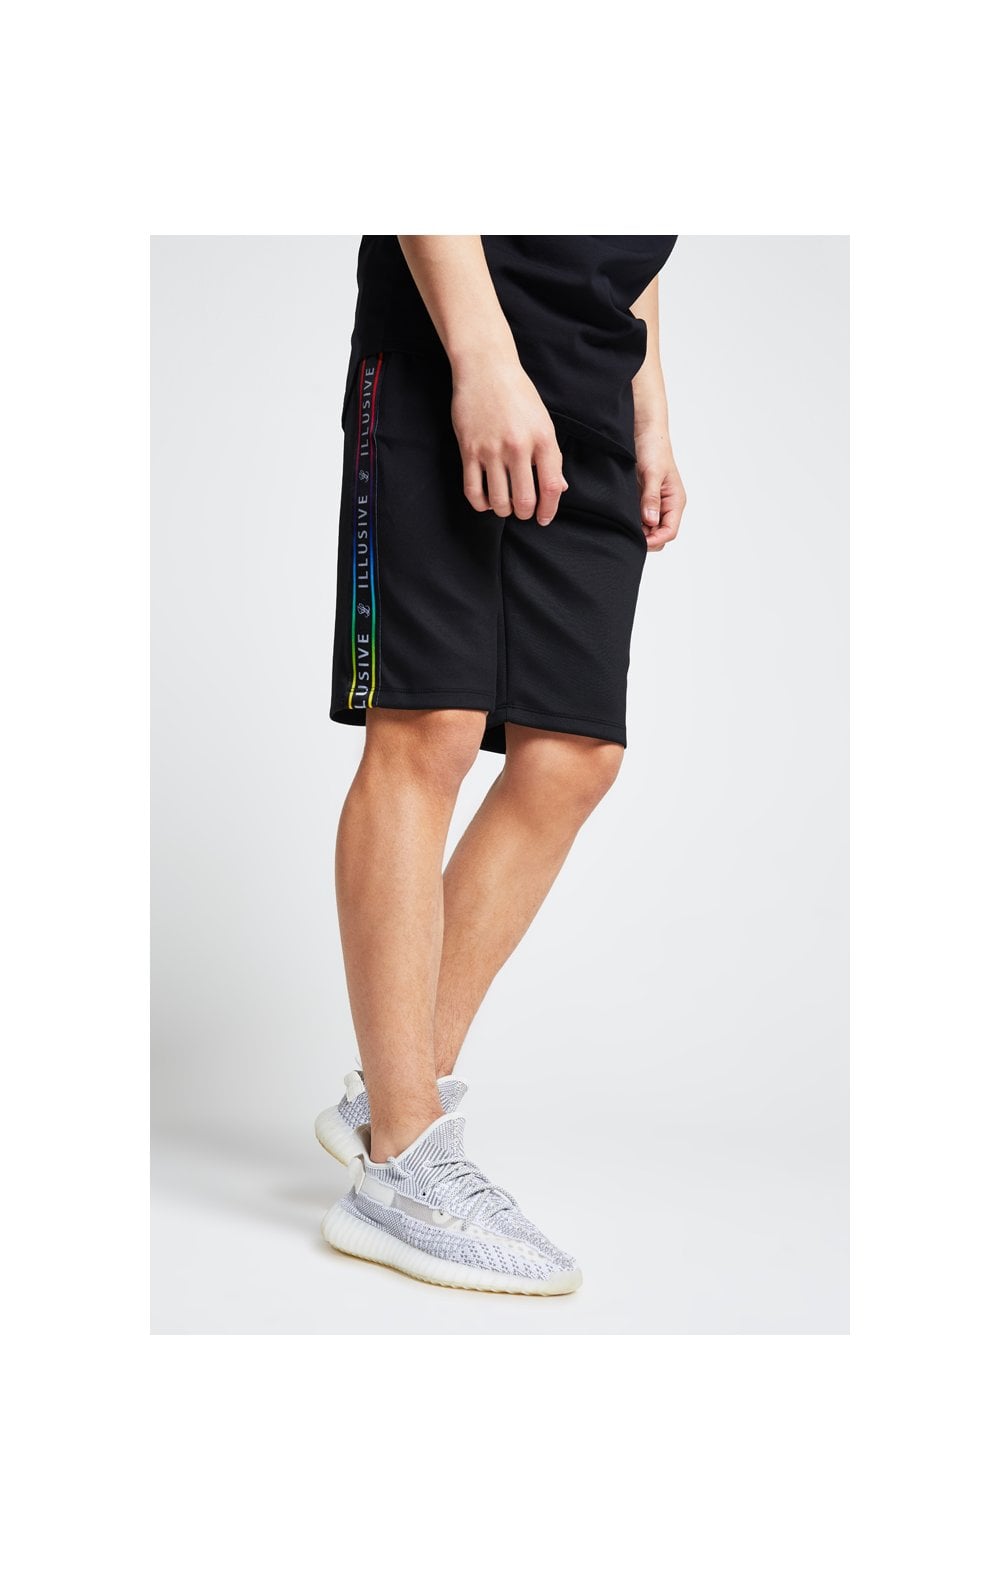 Illusive London Tape Jersey Shorts - Black (2)